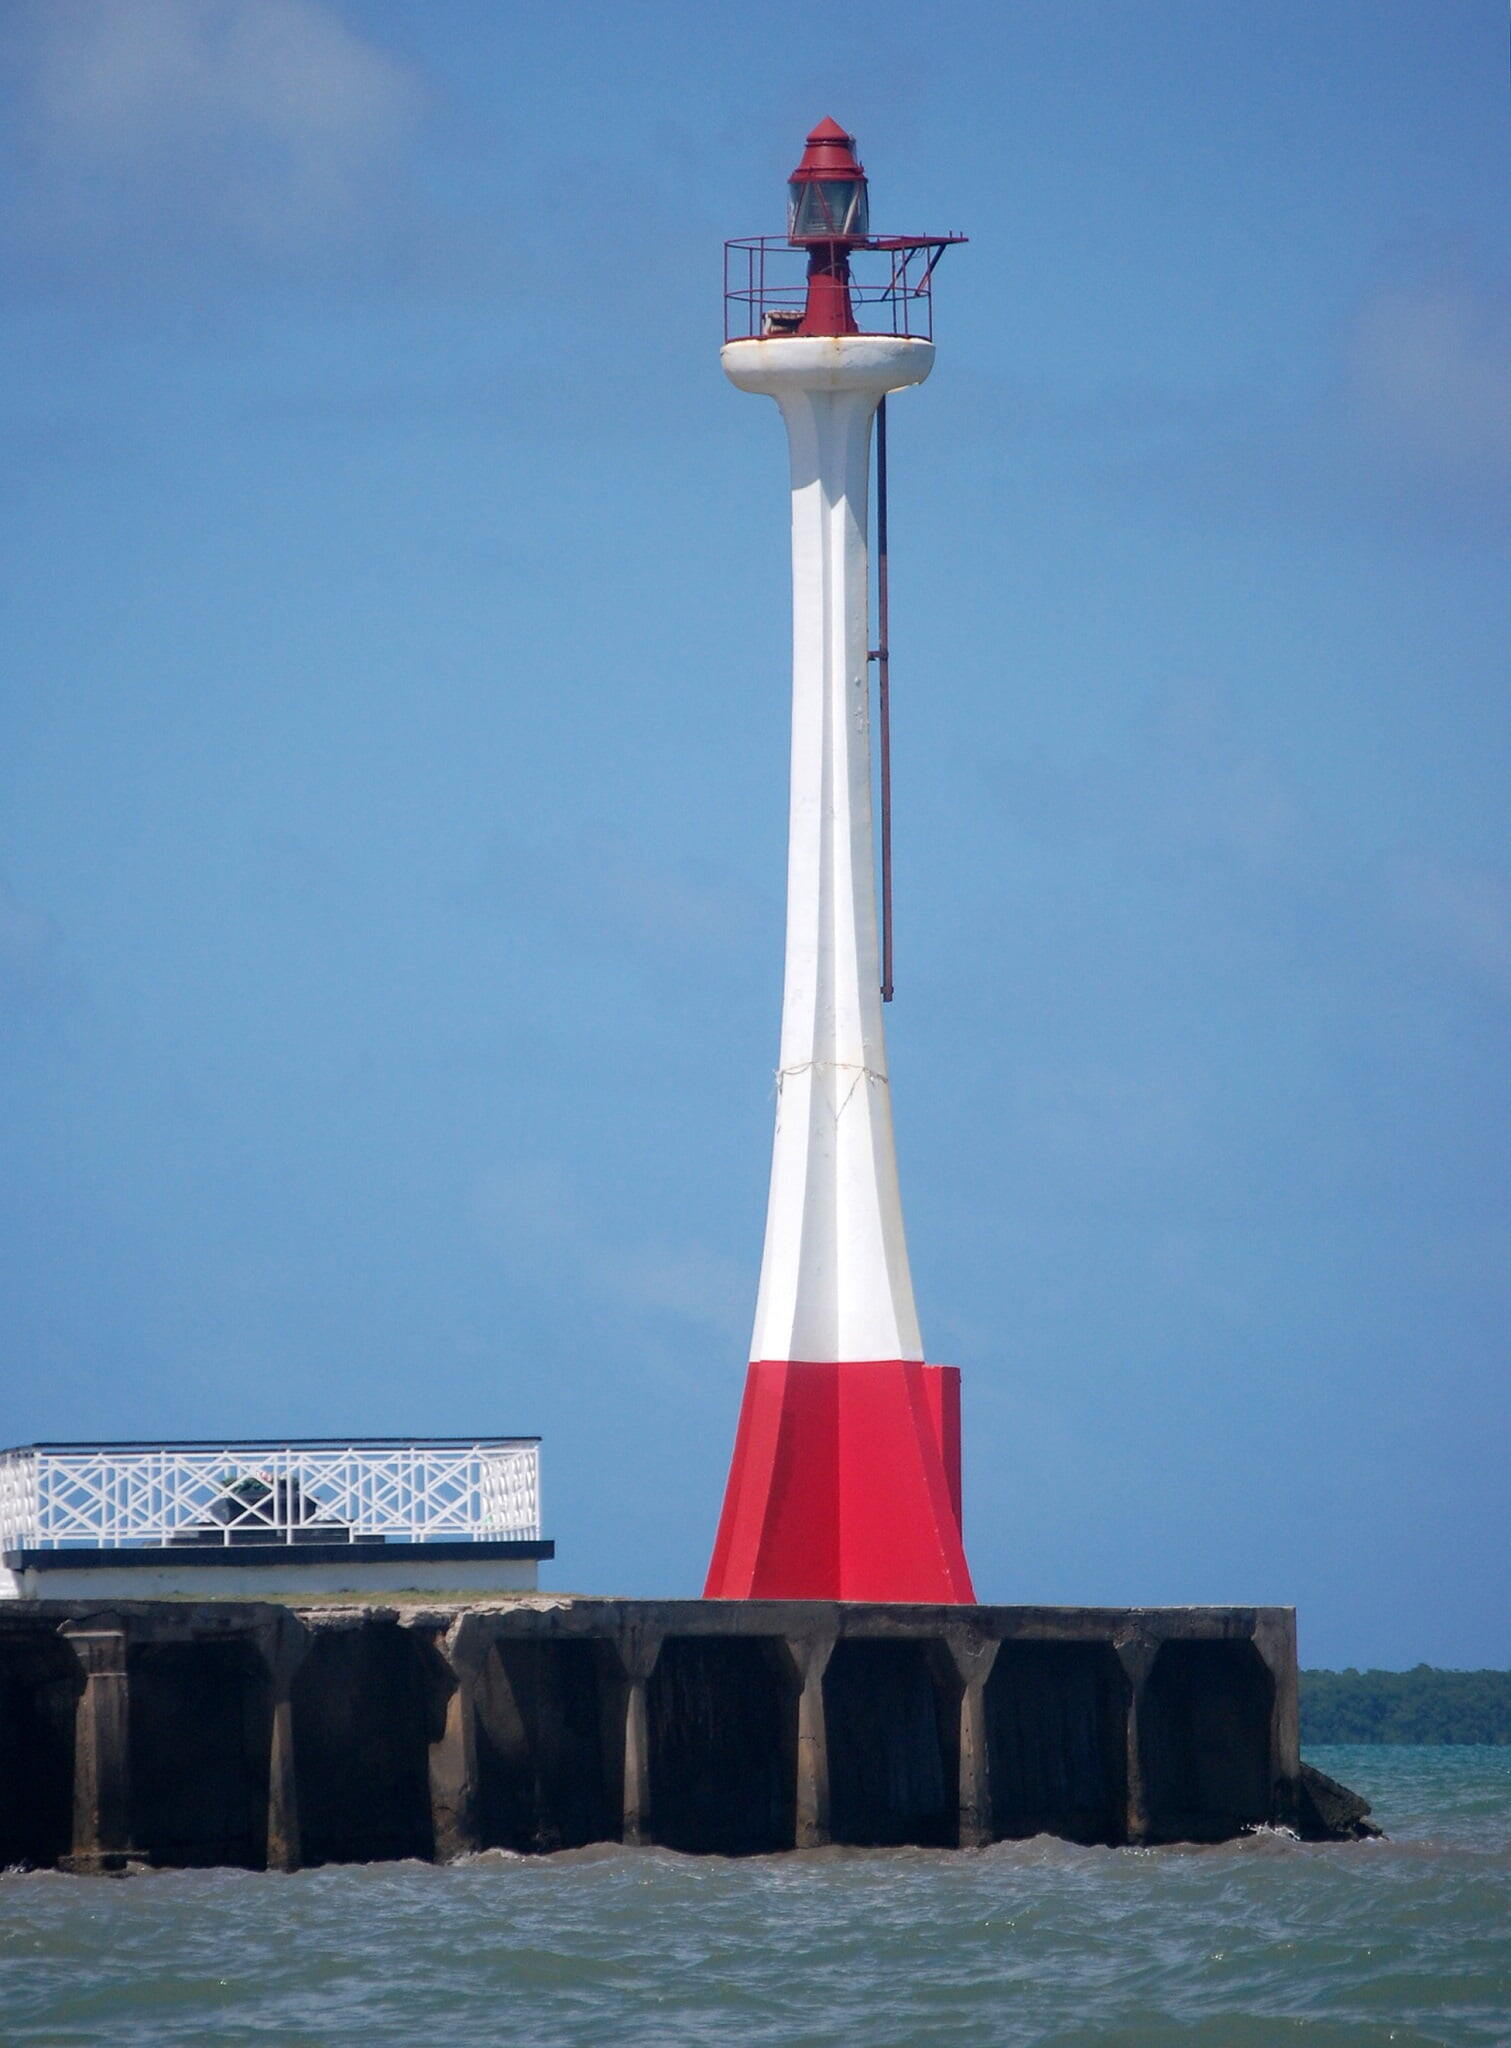 Belize City - Lighthouse in Belize City, Belize, Central America